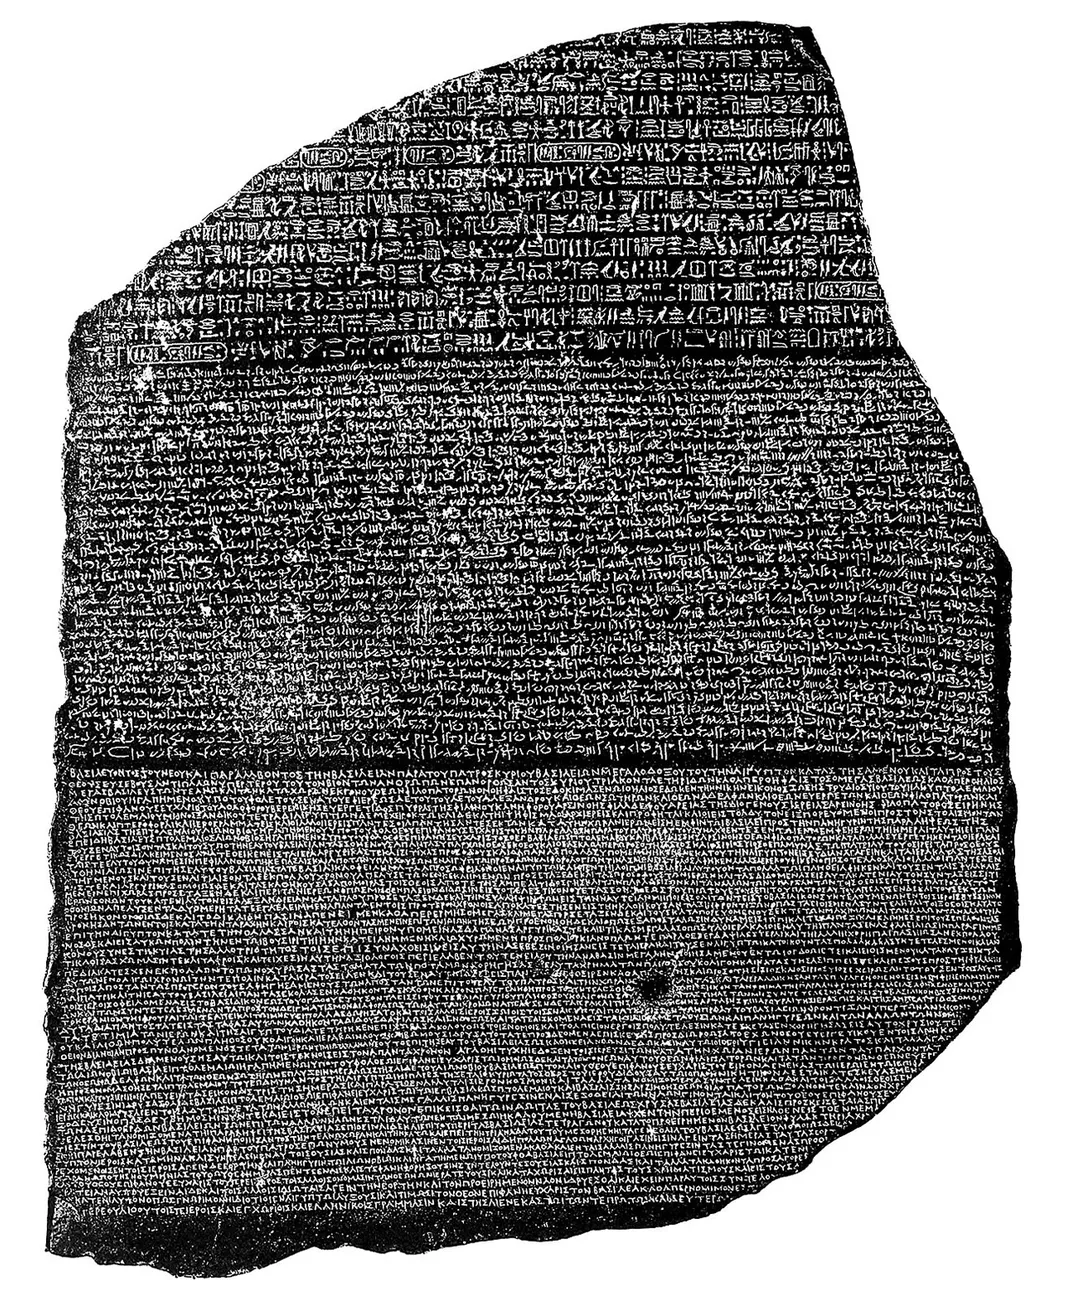 Rosetta Stone Decipher Ancient Egyptian Hieroglyphic 1799 1920s Trade Ad Card 